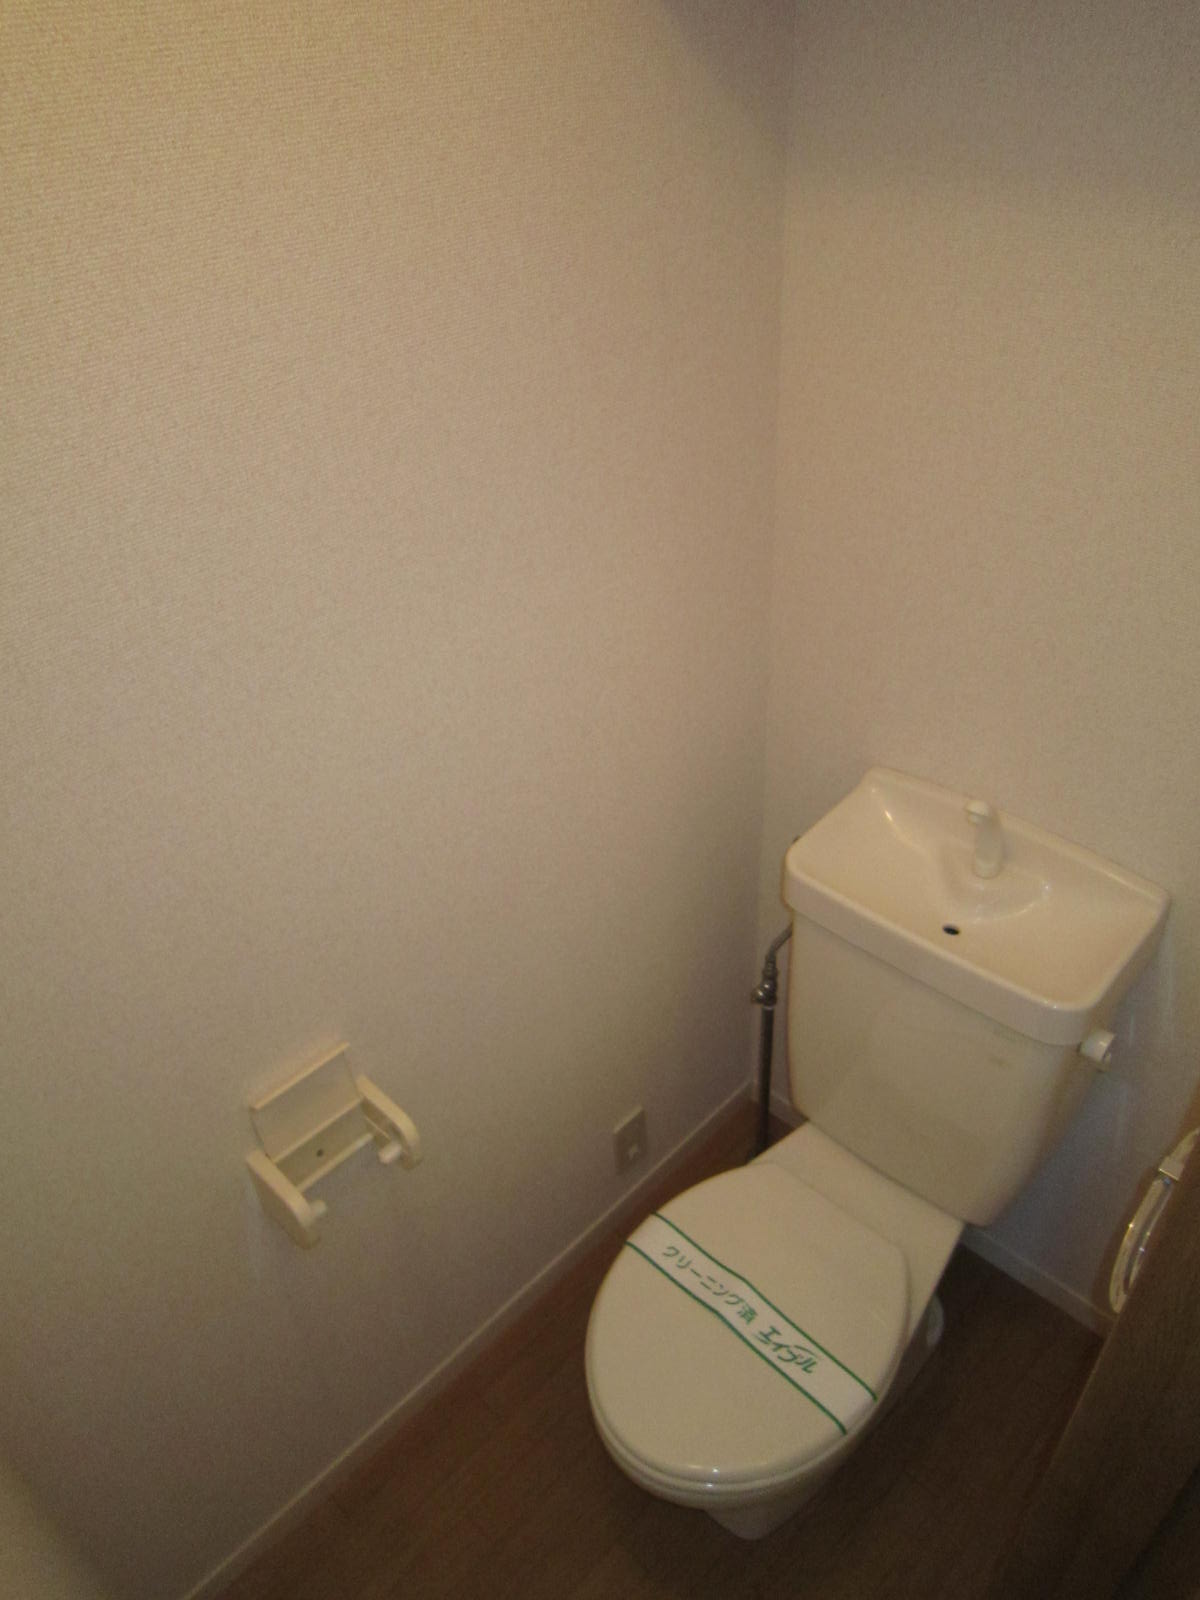 Toilet. Cleaning toilet seat mounting corresponding to the design